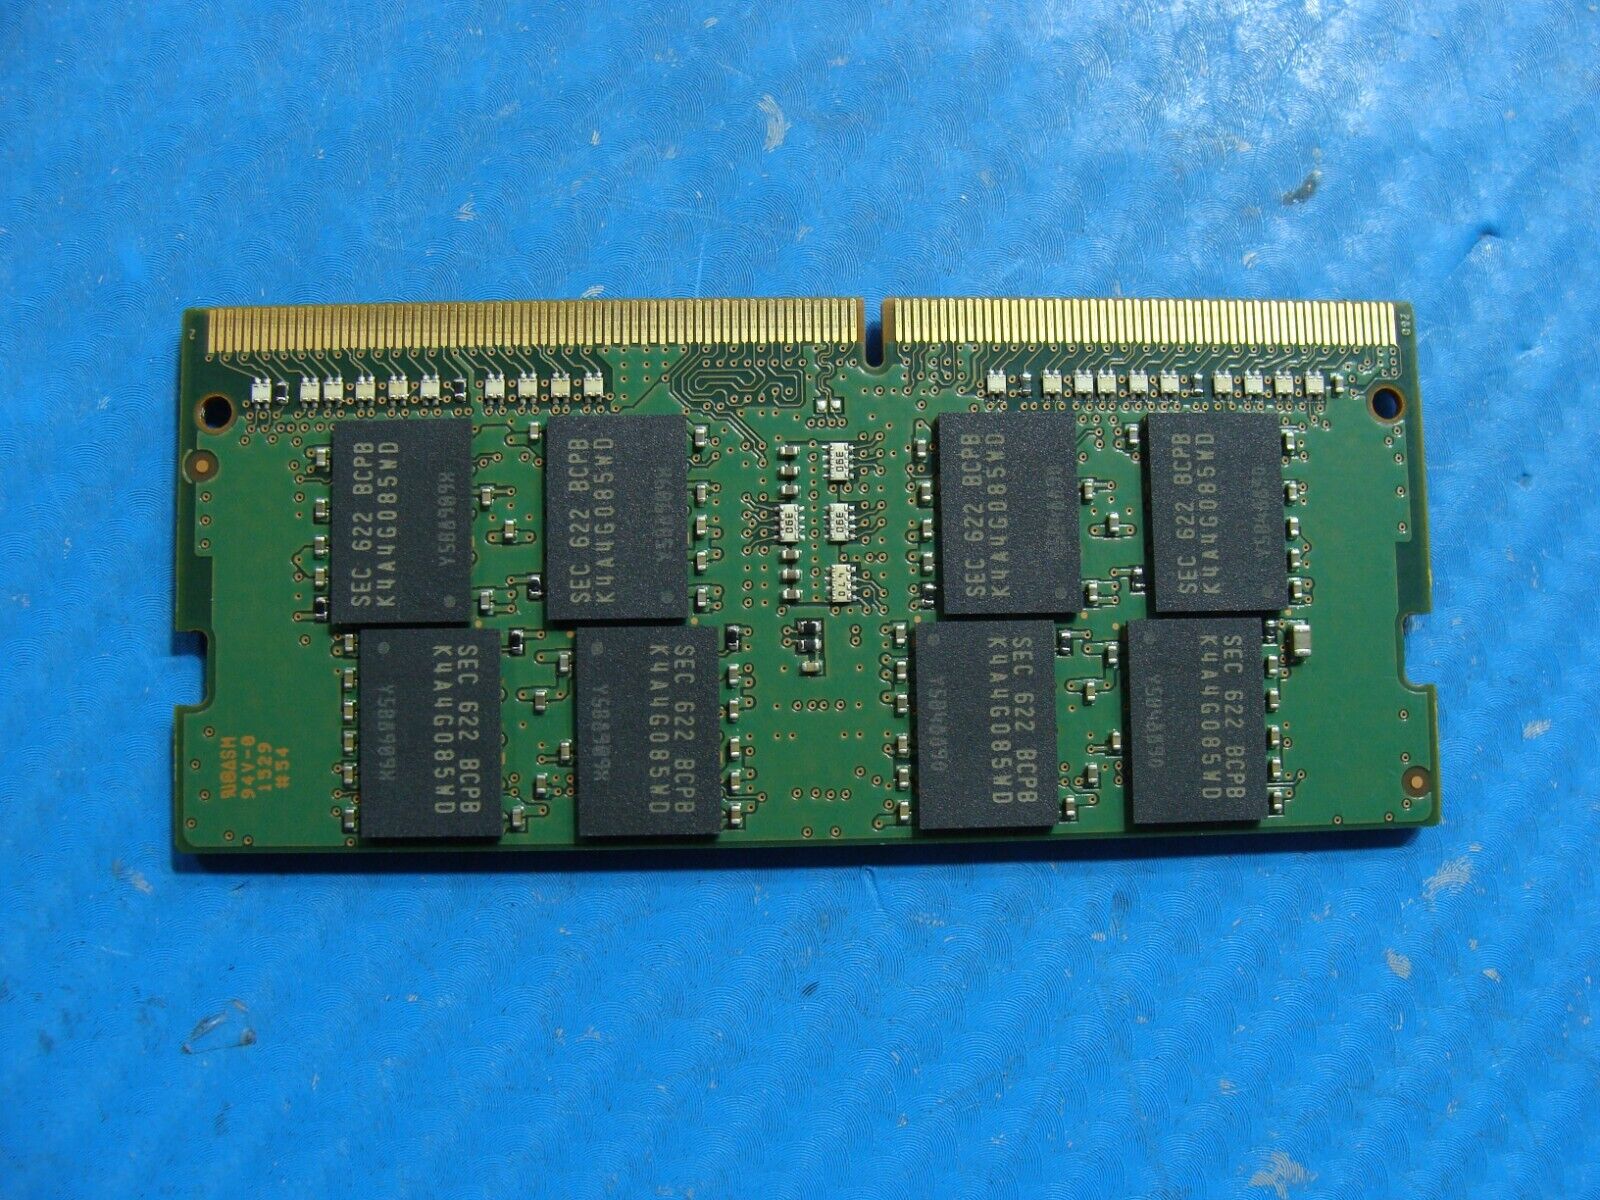 HP m3-u003dx Samsung 8GB 1Rx8 PC4-2133P Memory RAM SO-DIMM M471A1G43DB0-CPB